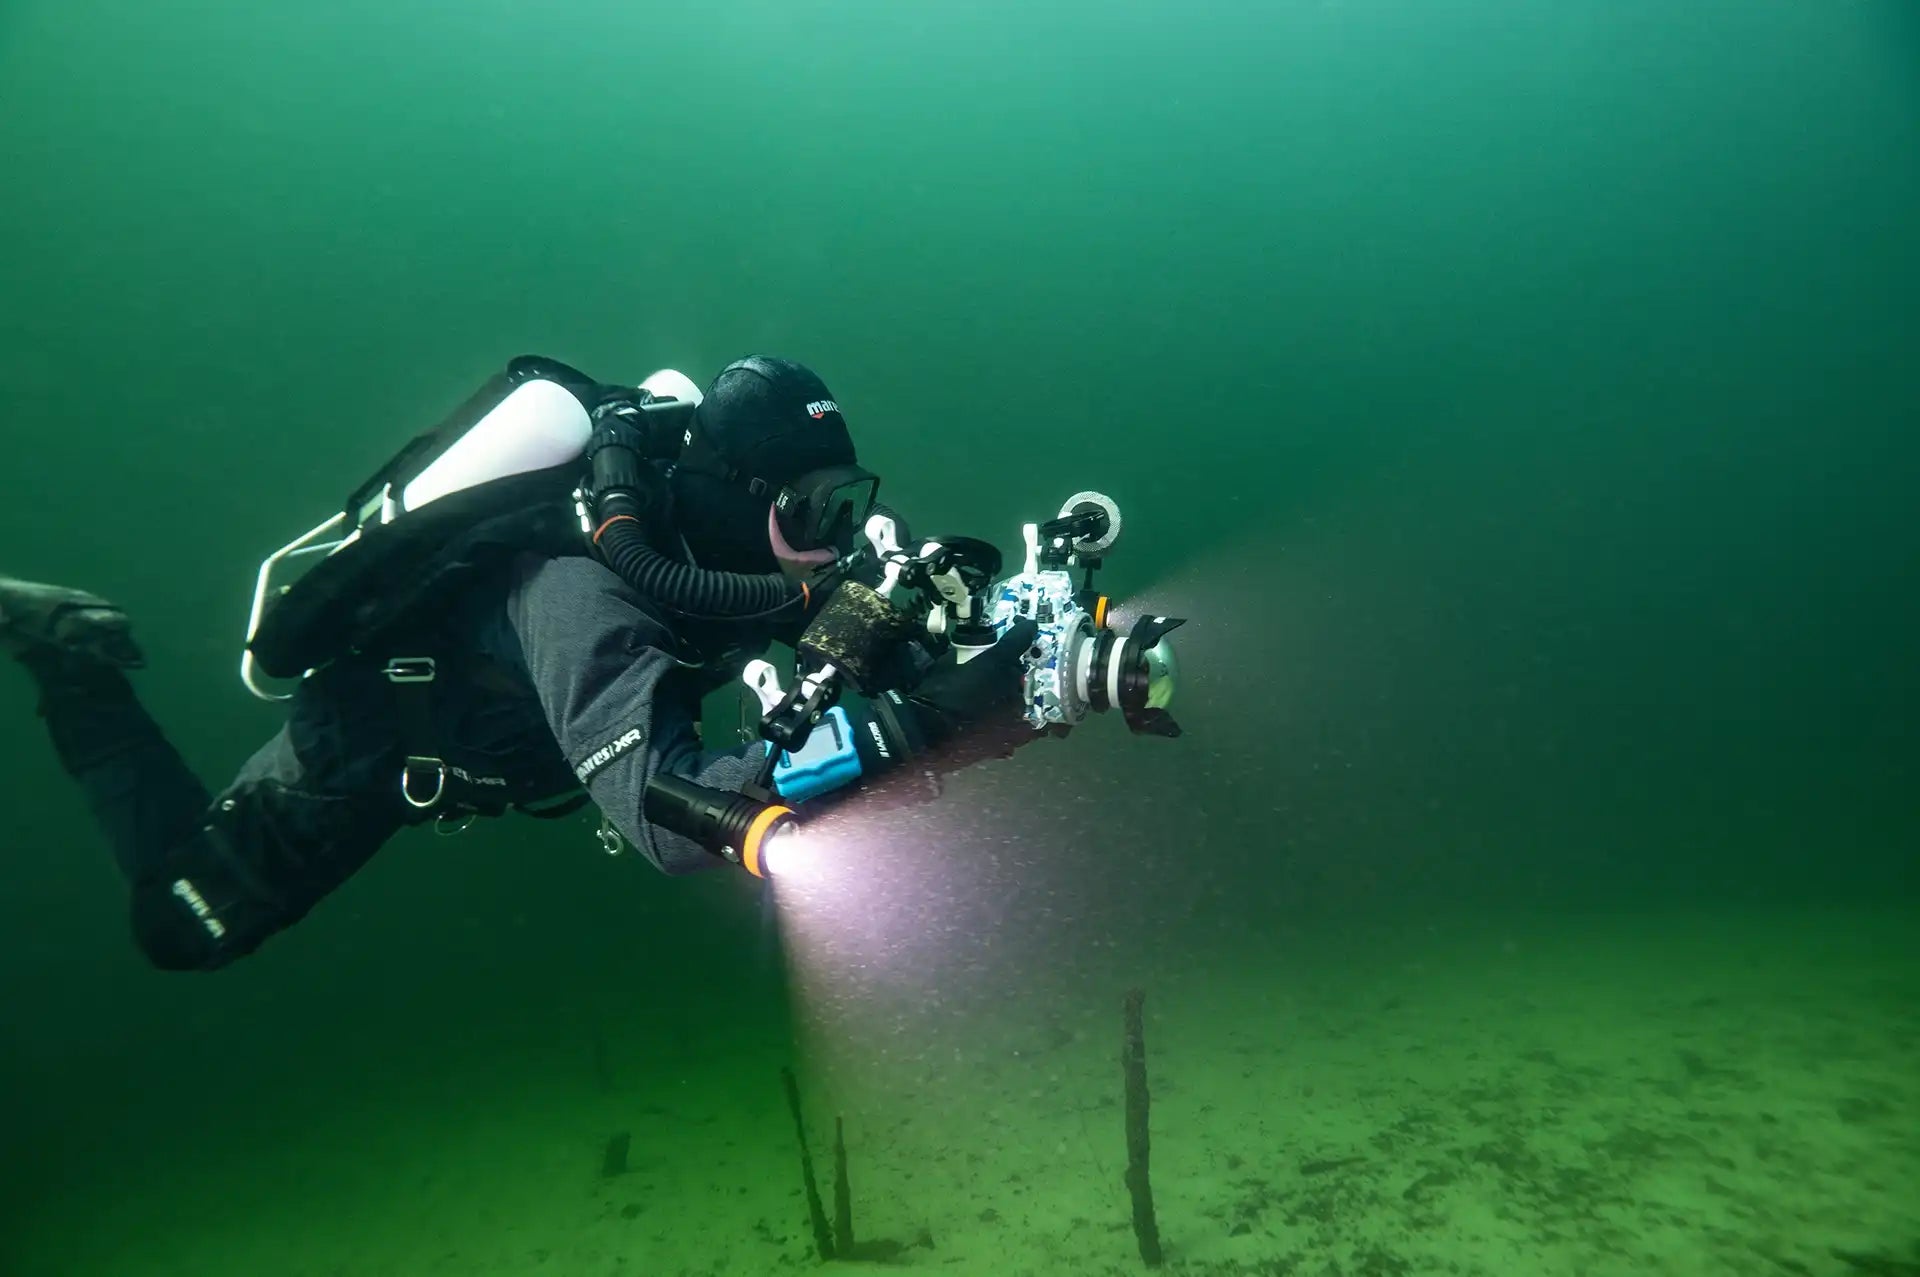 OrcaTorch D910V Underwater Video Light Max 5000 Lumens